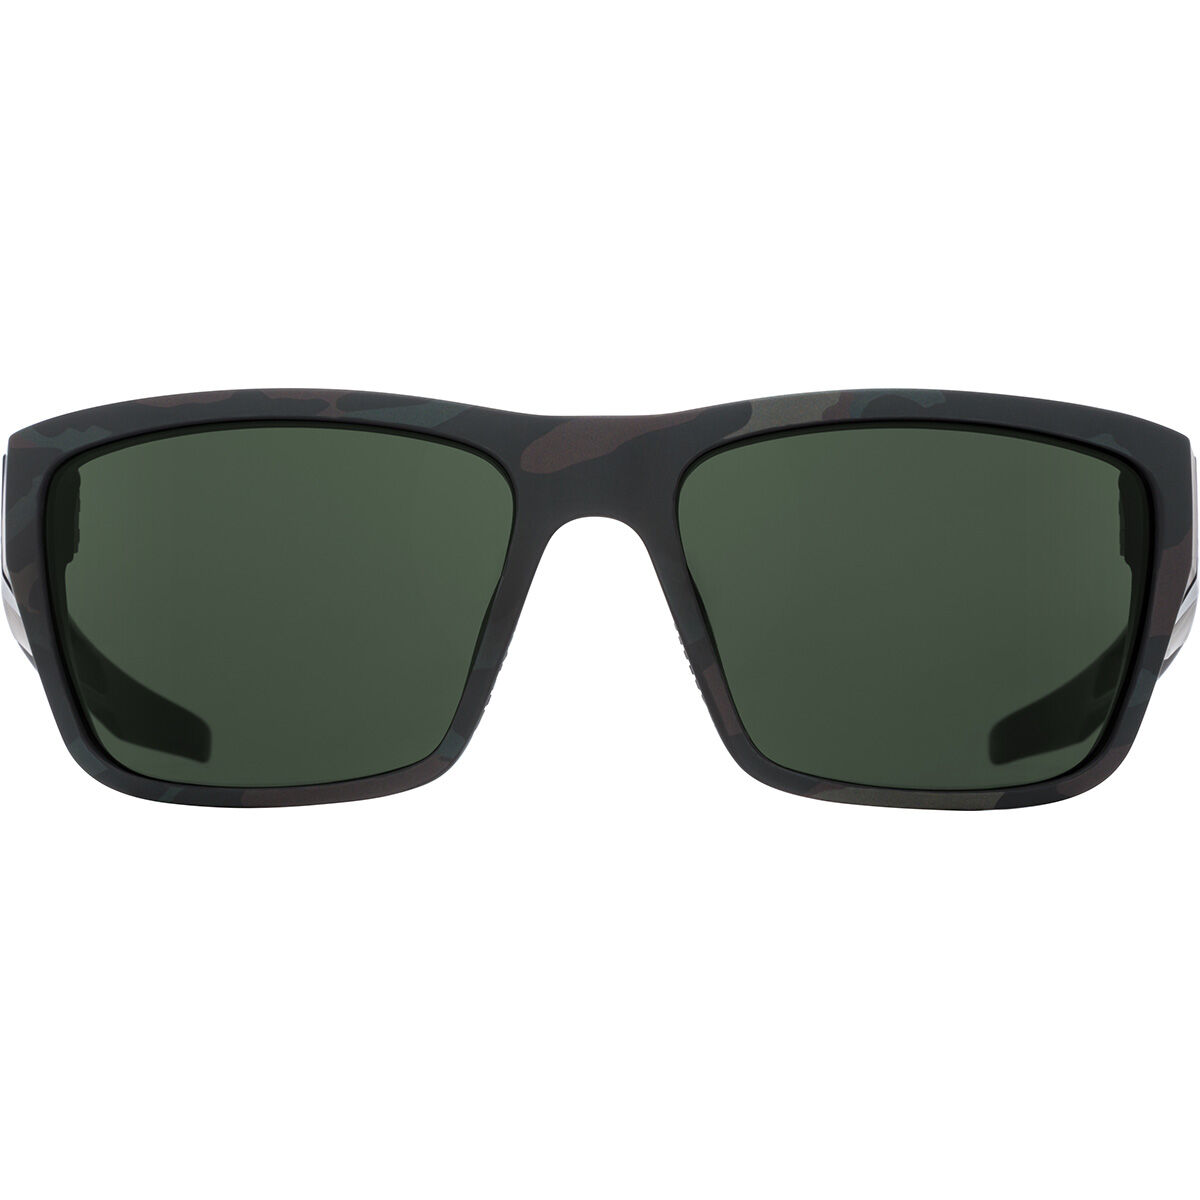 DIRTY MO 2 Mens Sunglasses by Spy Optic